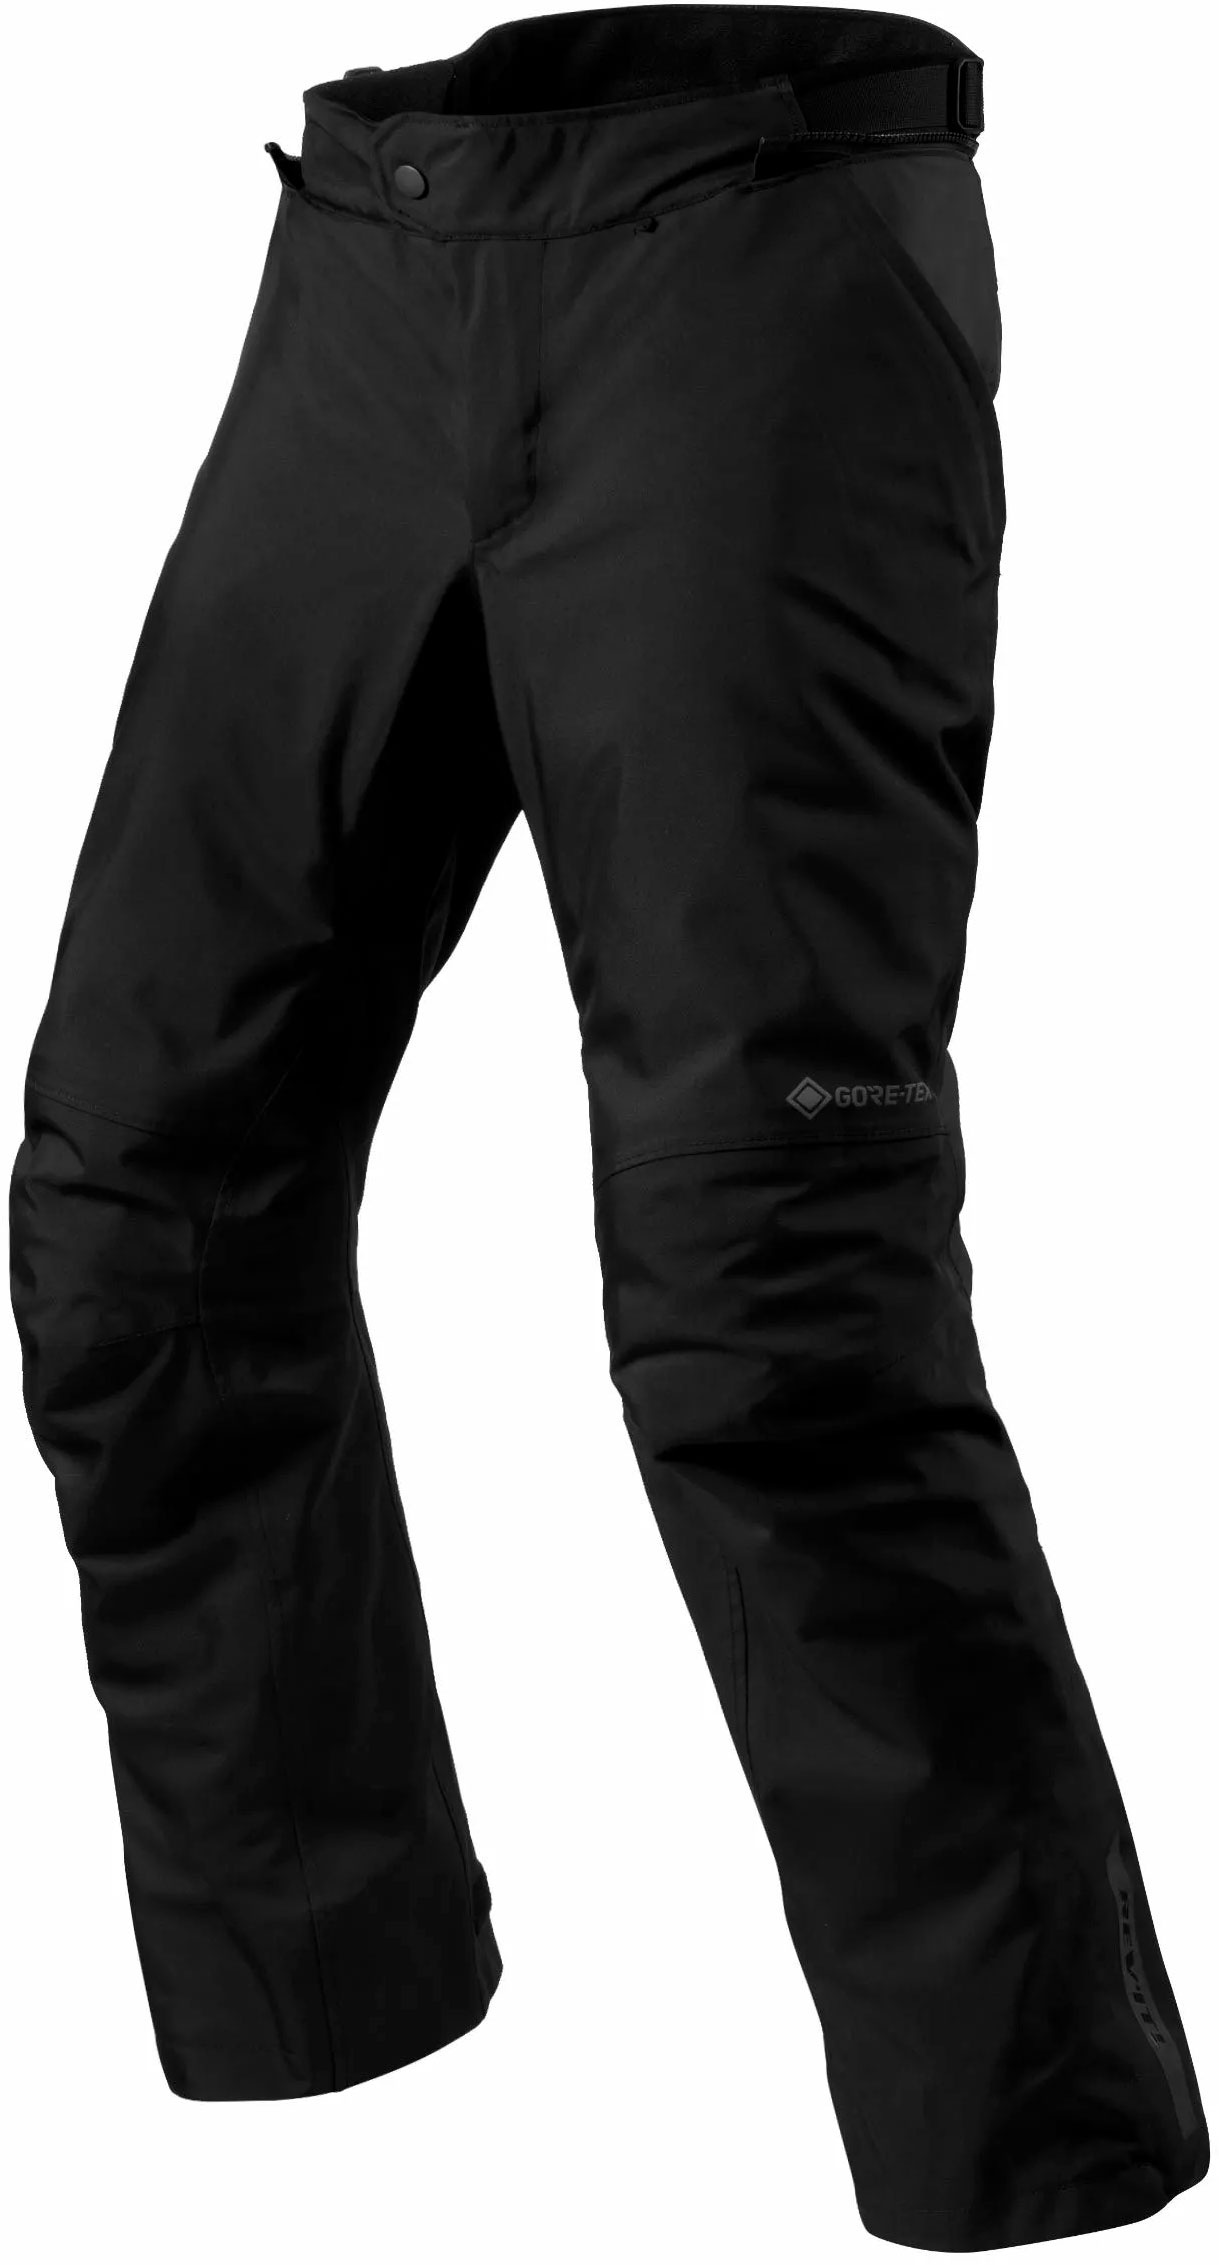 Revit Vertical GTX, pantalon textile imperméable - Noir - XL